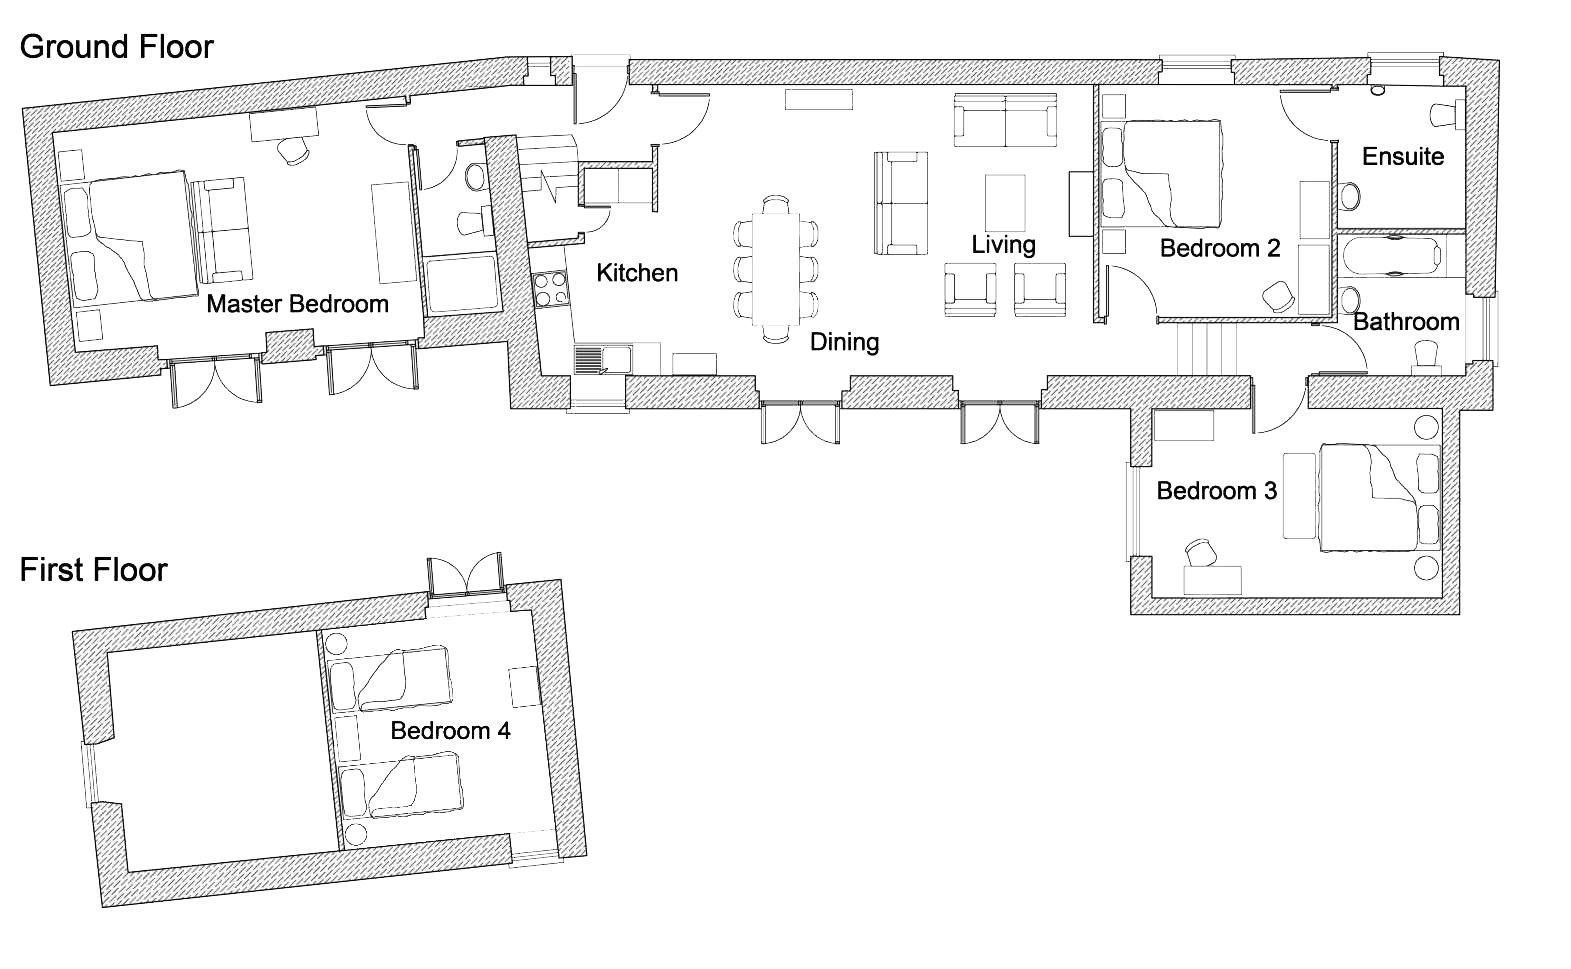 The floorplan for The Garden House